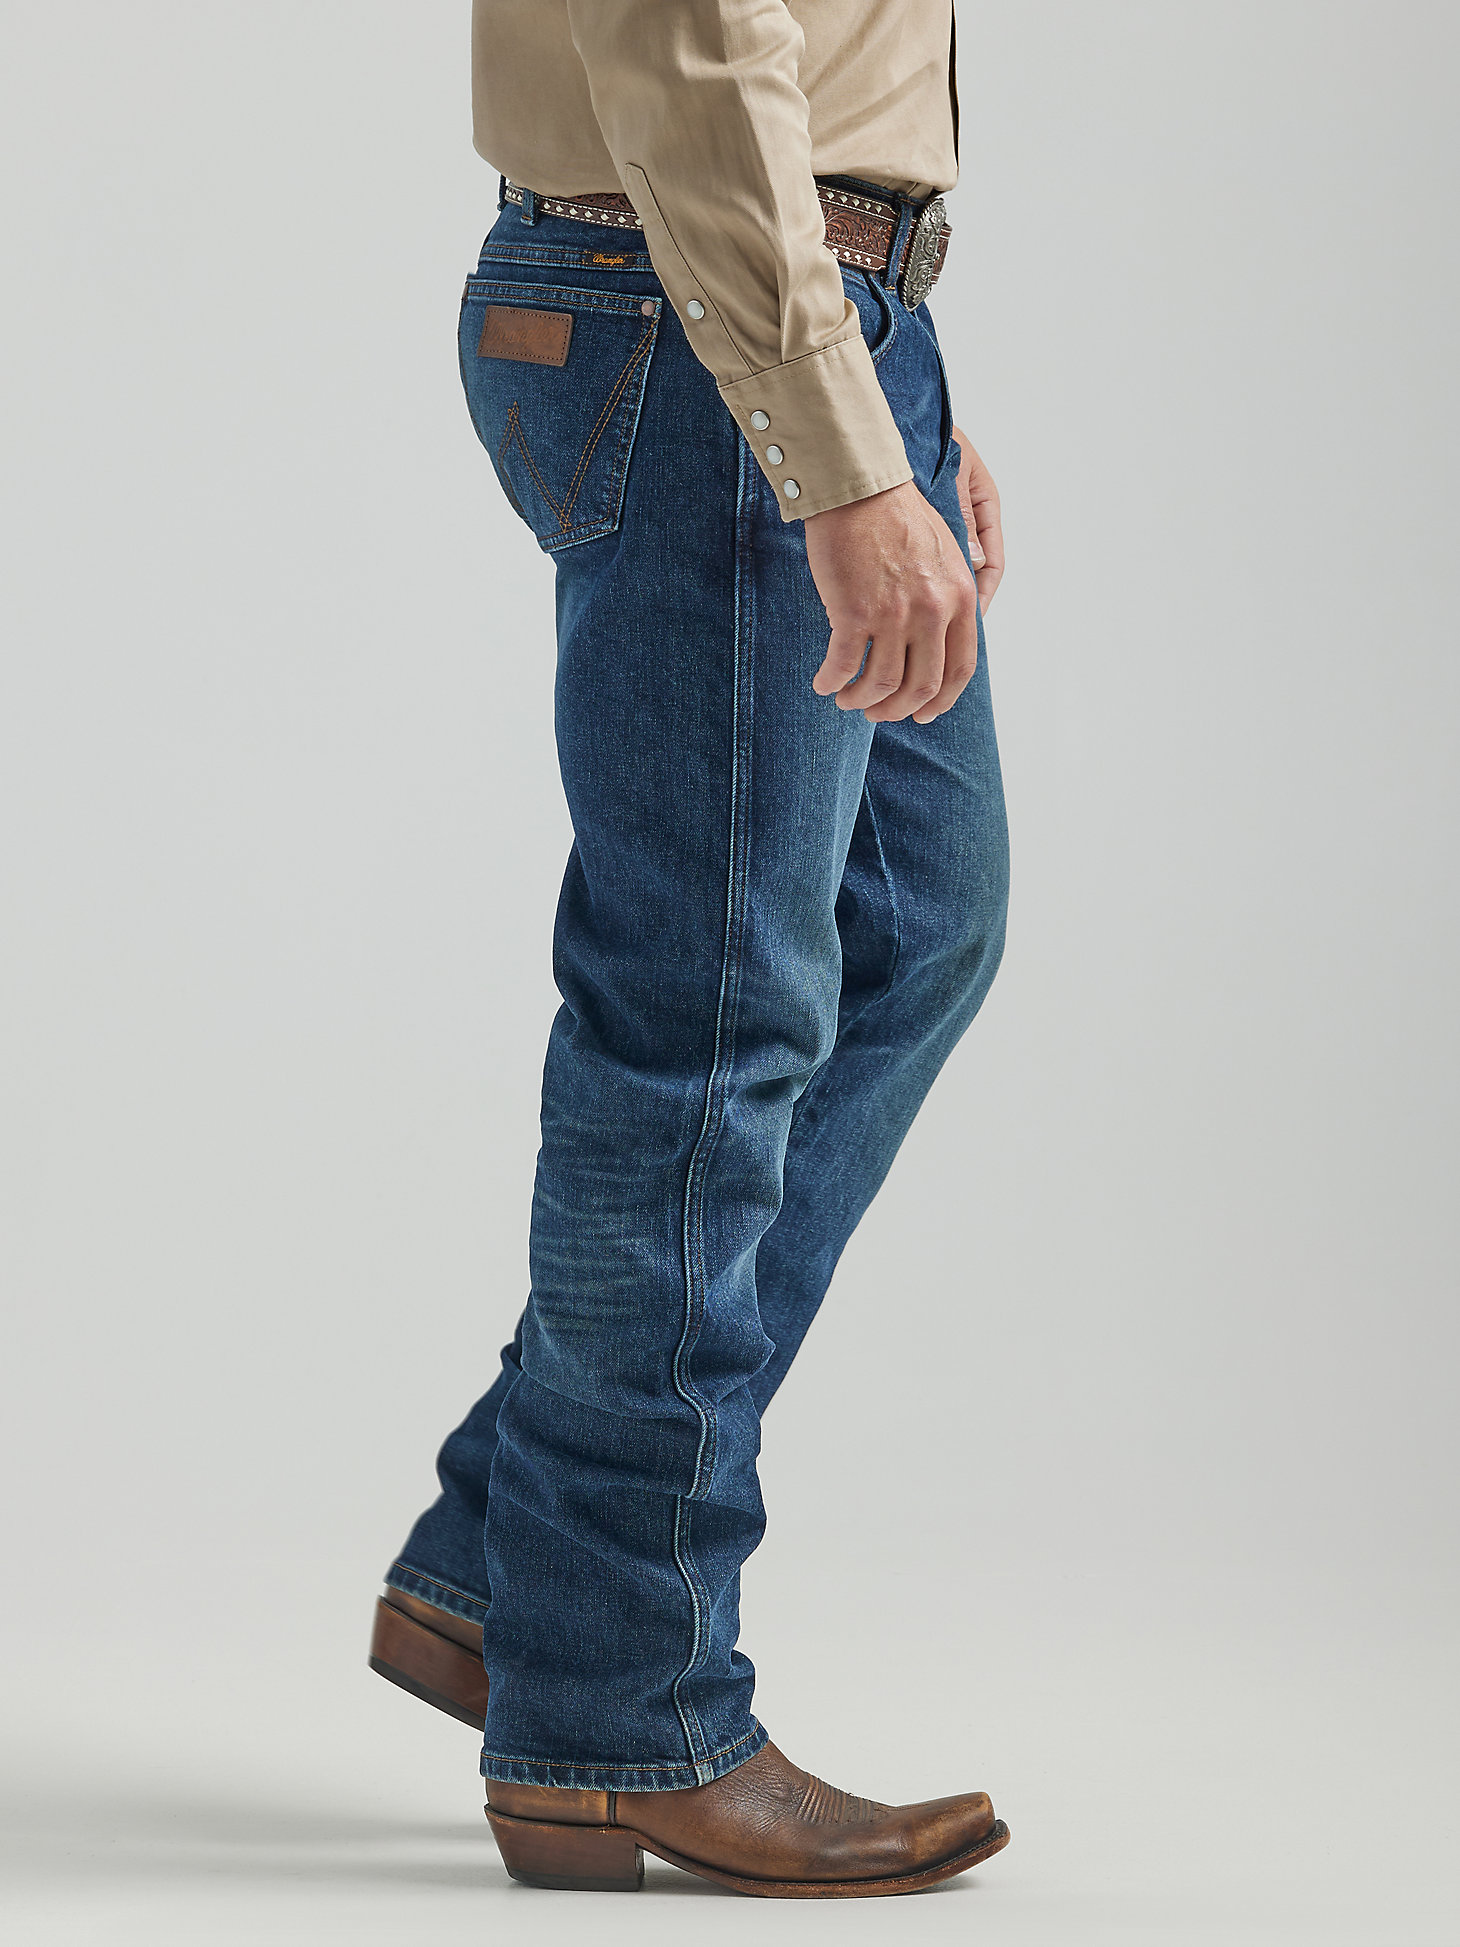 The Wrangler Retro® Premium Jean: Men's Slim Straight in Blue Dasher alternative view 1